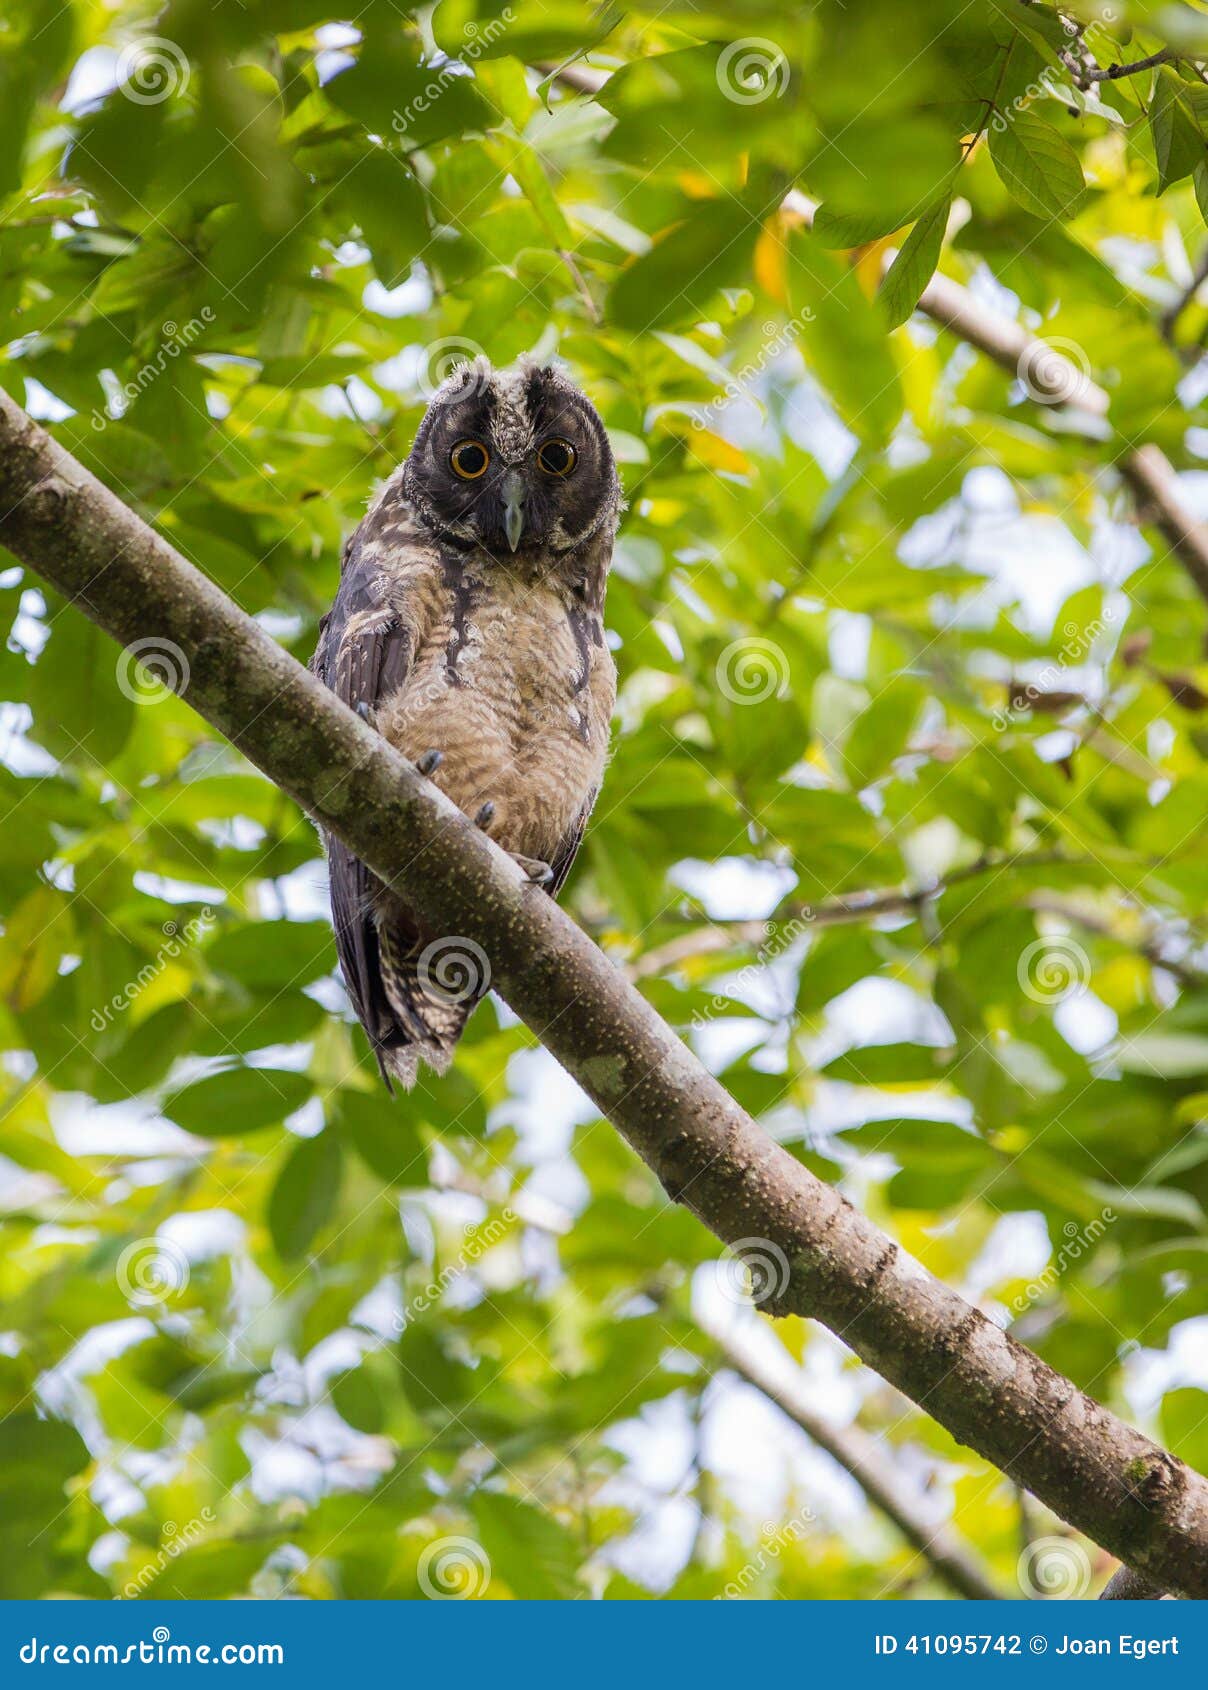 juvenile stygian owl looking down